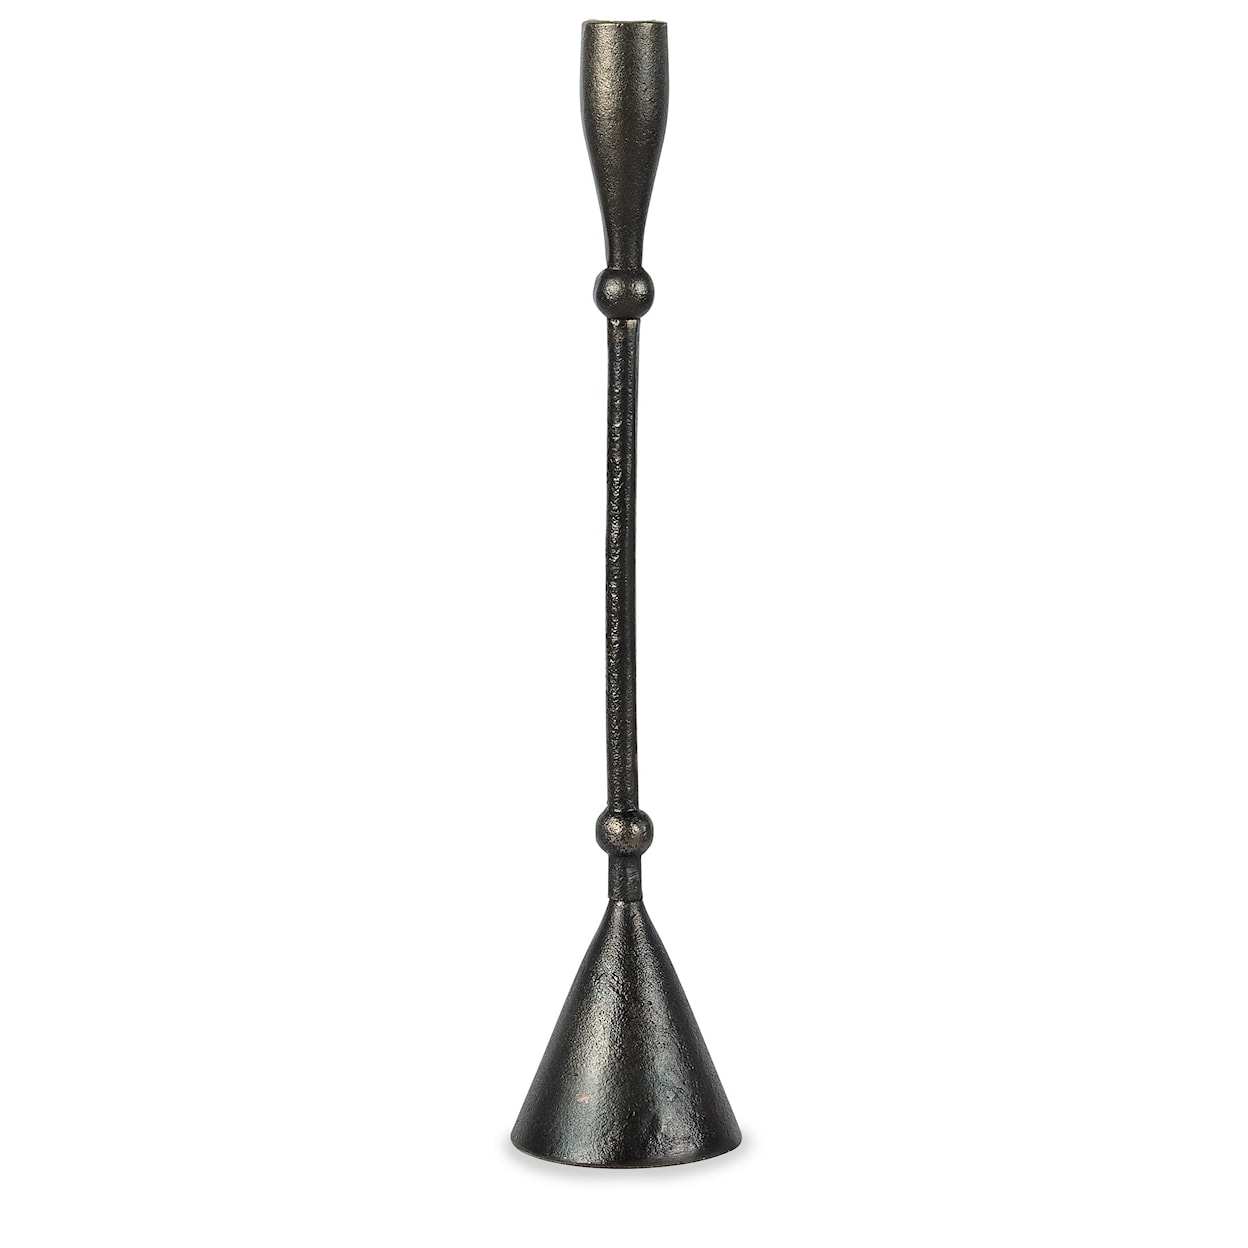 BOBO Intriguing Objects Accessory Antique Black Candleholder - Medium